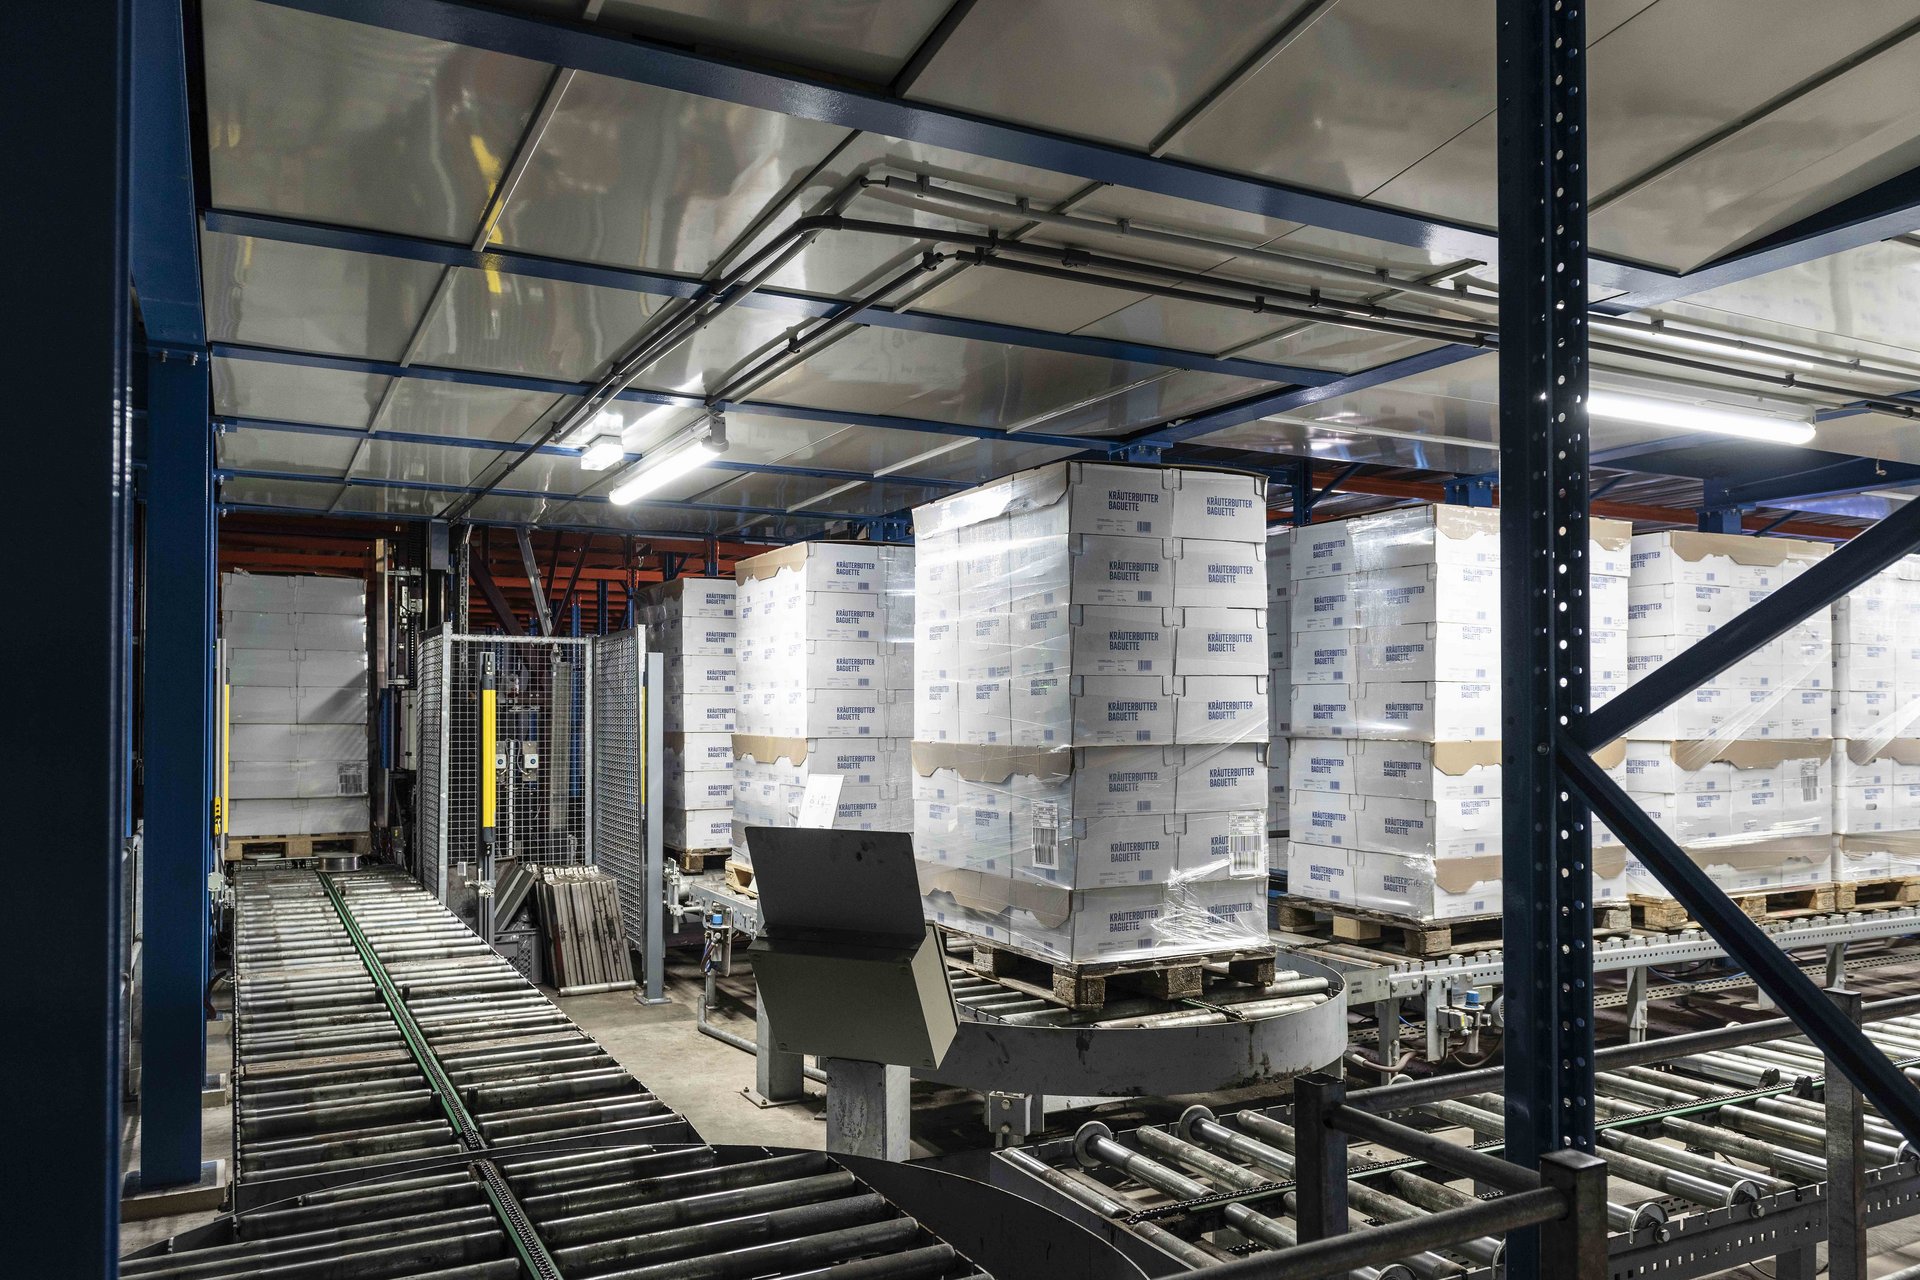 Loading units on roller conveyors and turntable, Sinnack Backspezialitäten GmbH